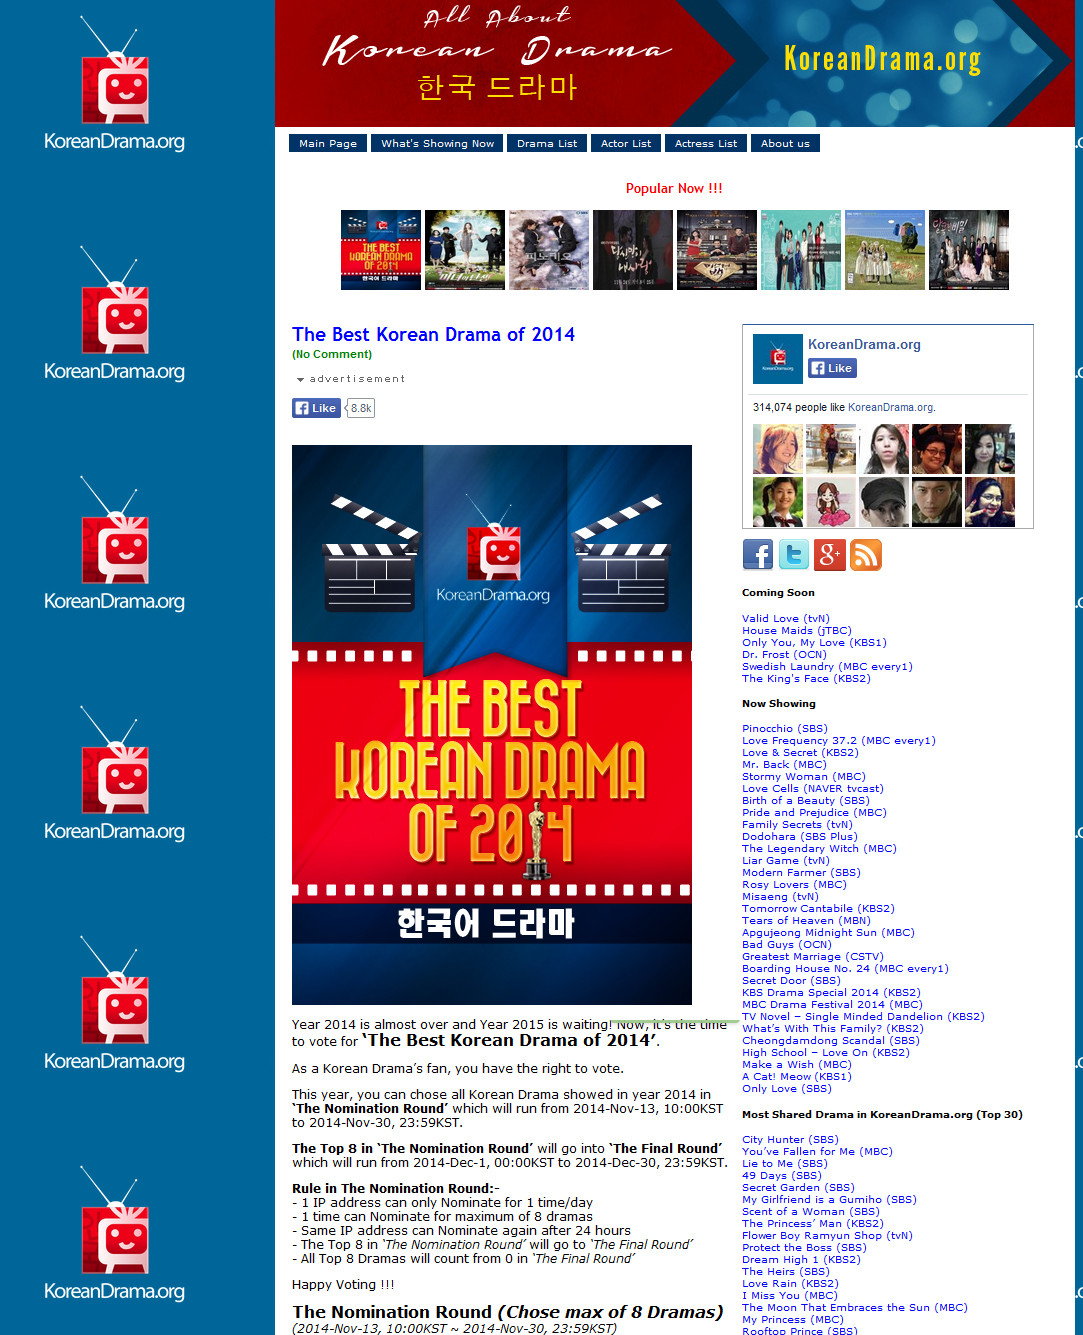 Vote For Inspiring Generation For The Best Korean Drama Of 2014